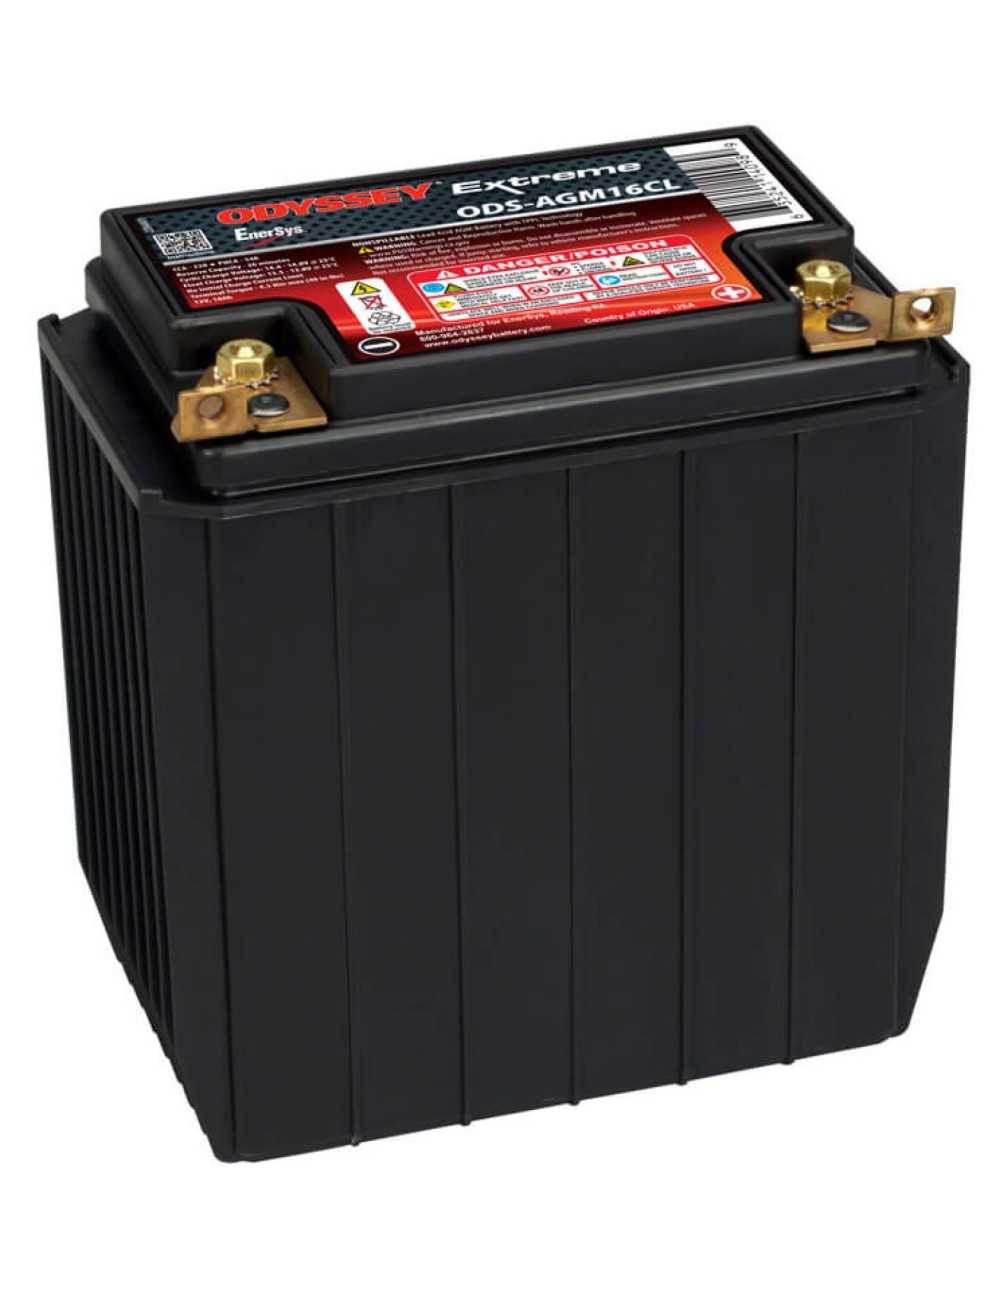 Loodbatterij 12V 18Ah (PC625/ODS-AGM16CL)